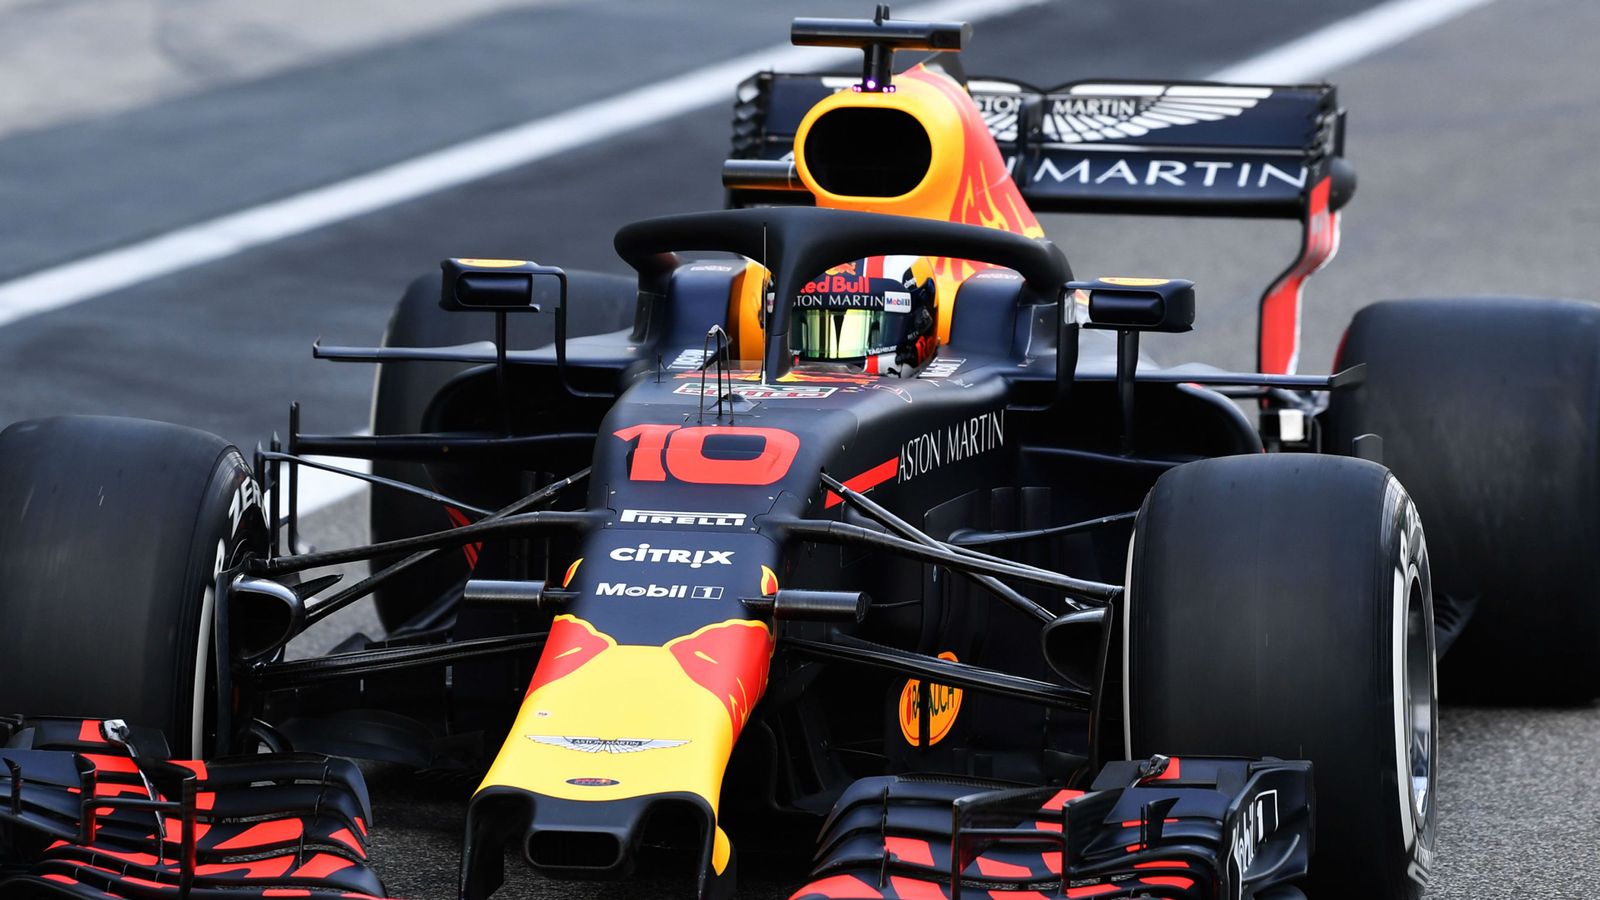 F1 news: Red Bull encouraged by Honda for 2019 season | F1 ...